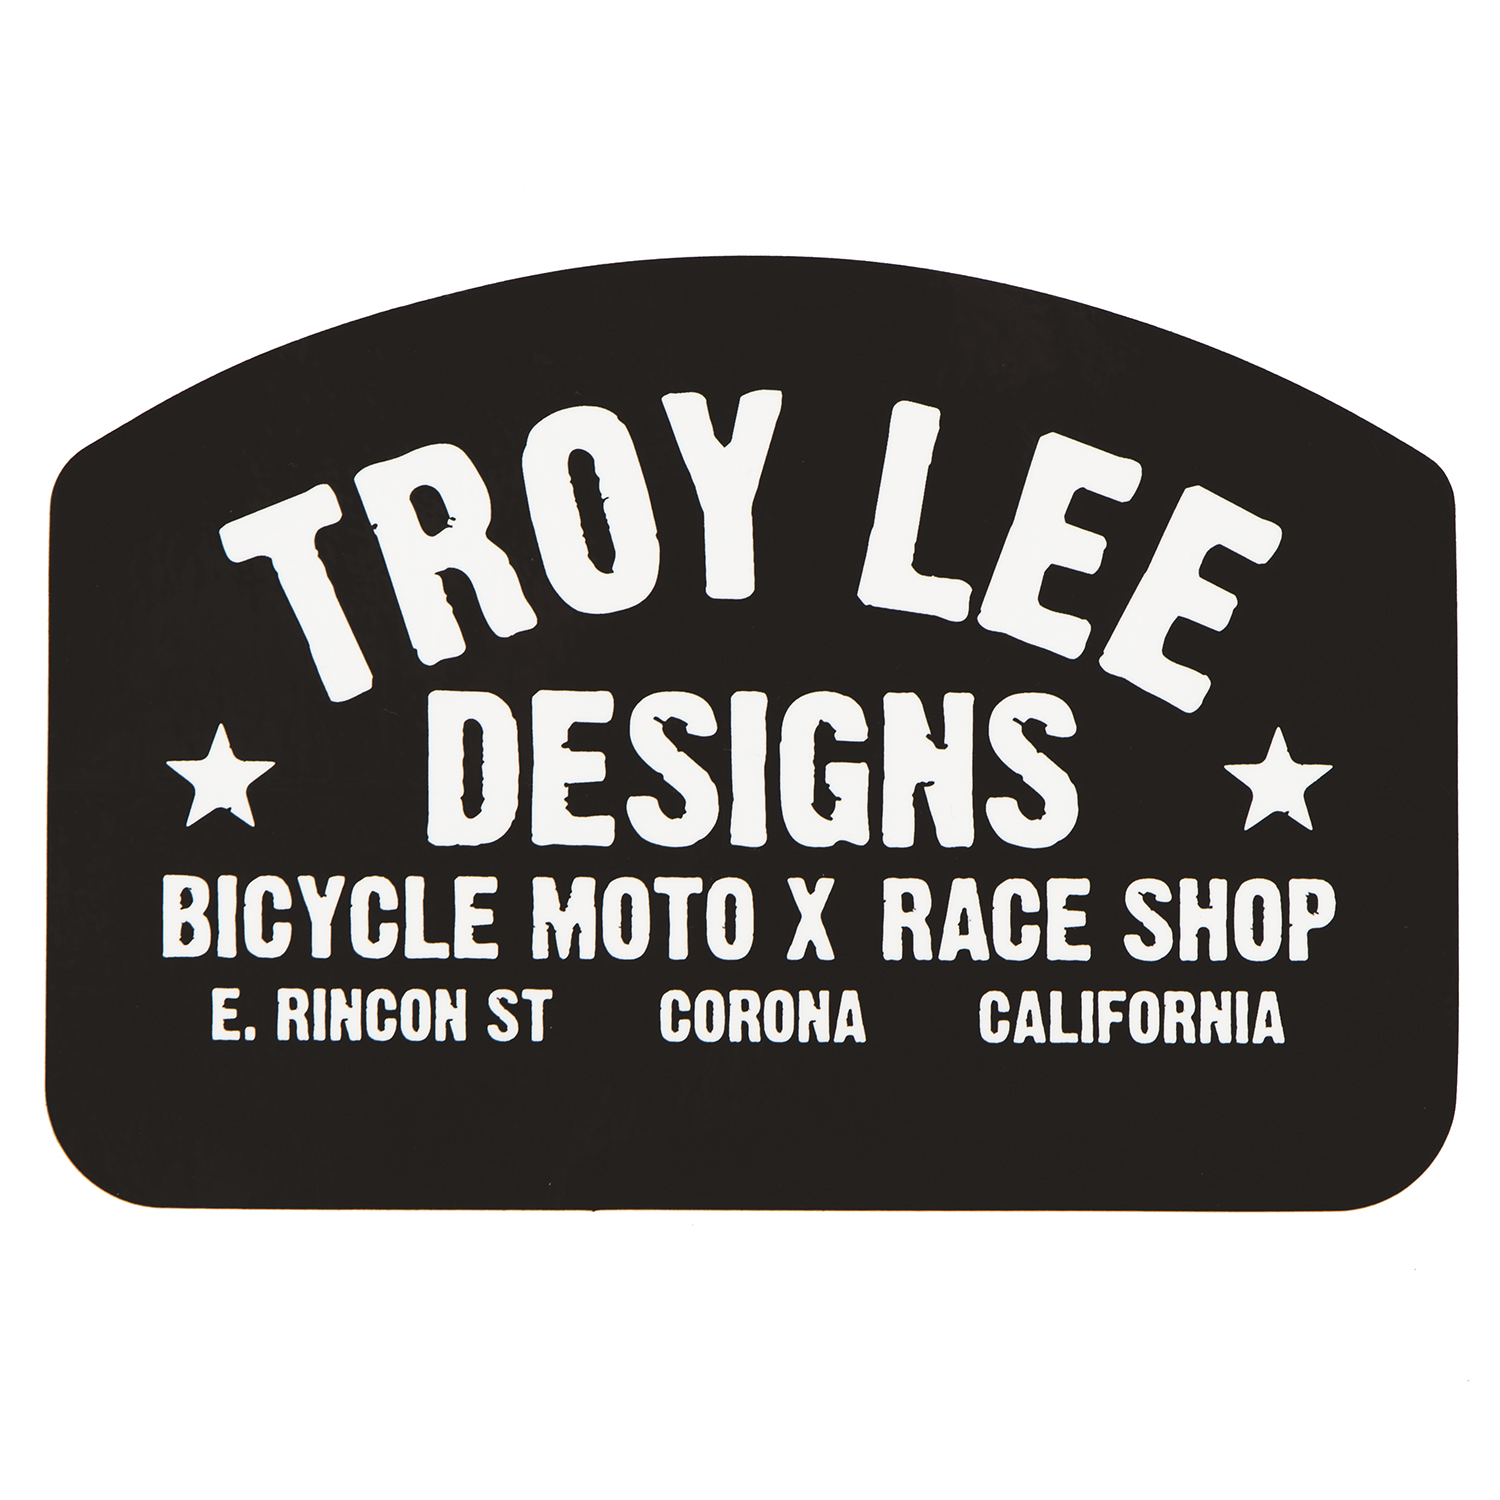 Troy Lee Designs Adesivi Race Shop Black/White - 6.5 inches